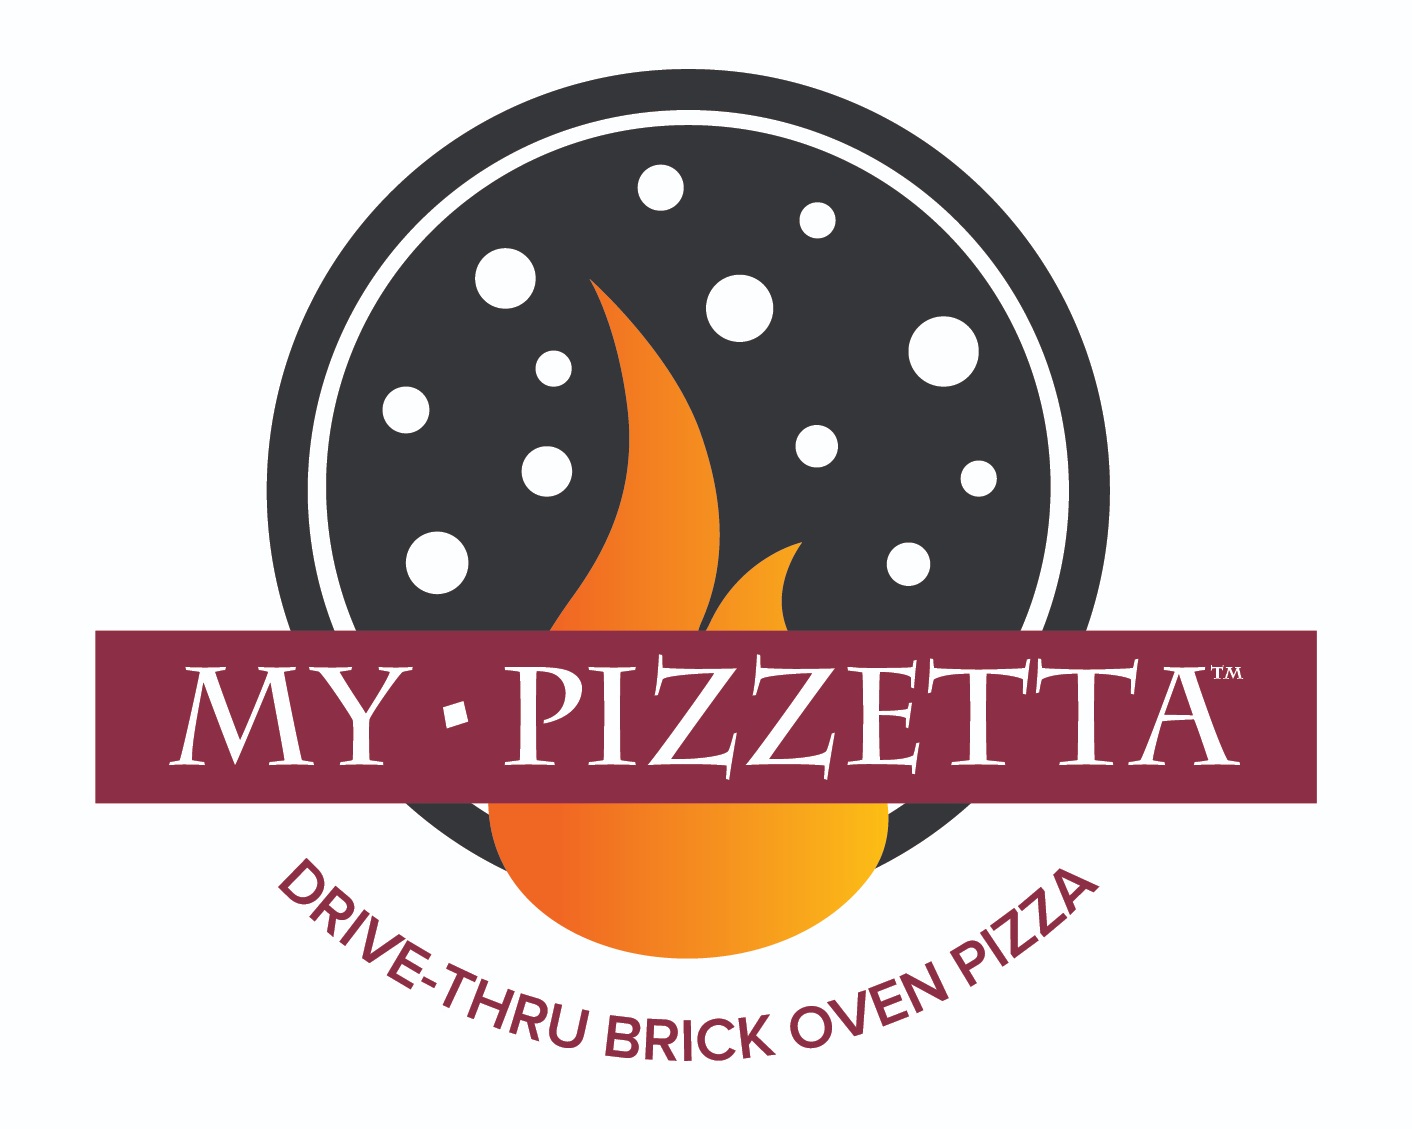 The Rock Brick Oven Pizza